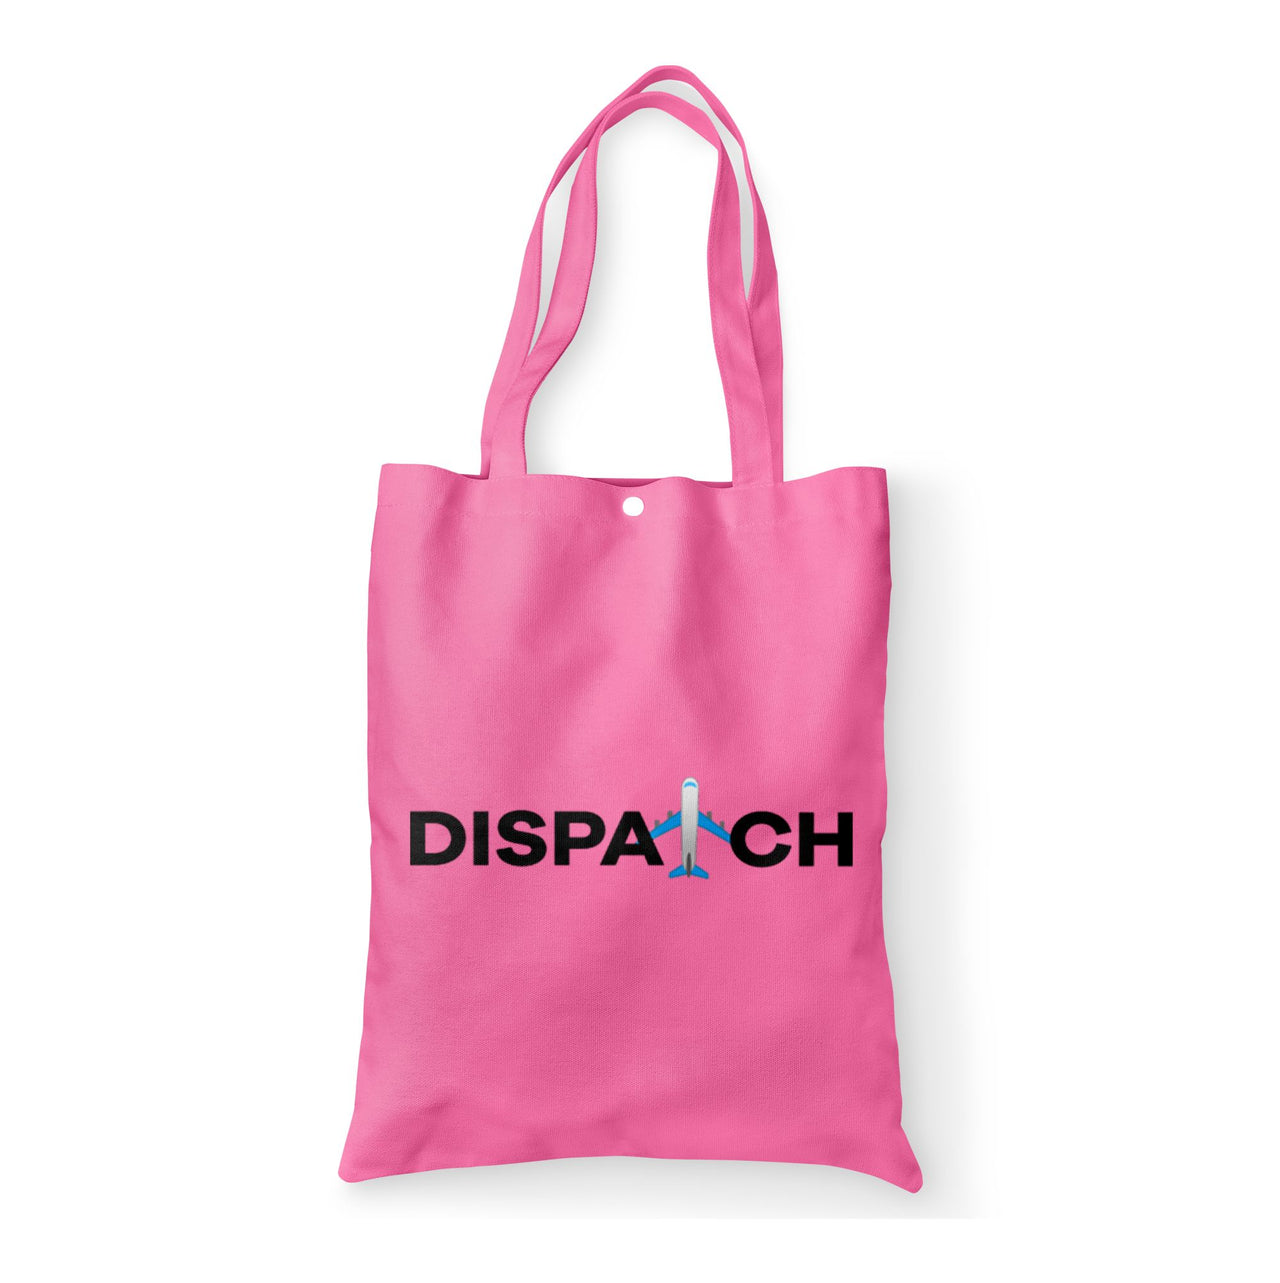 Dispatch Designed Tote Bags